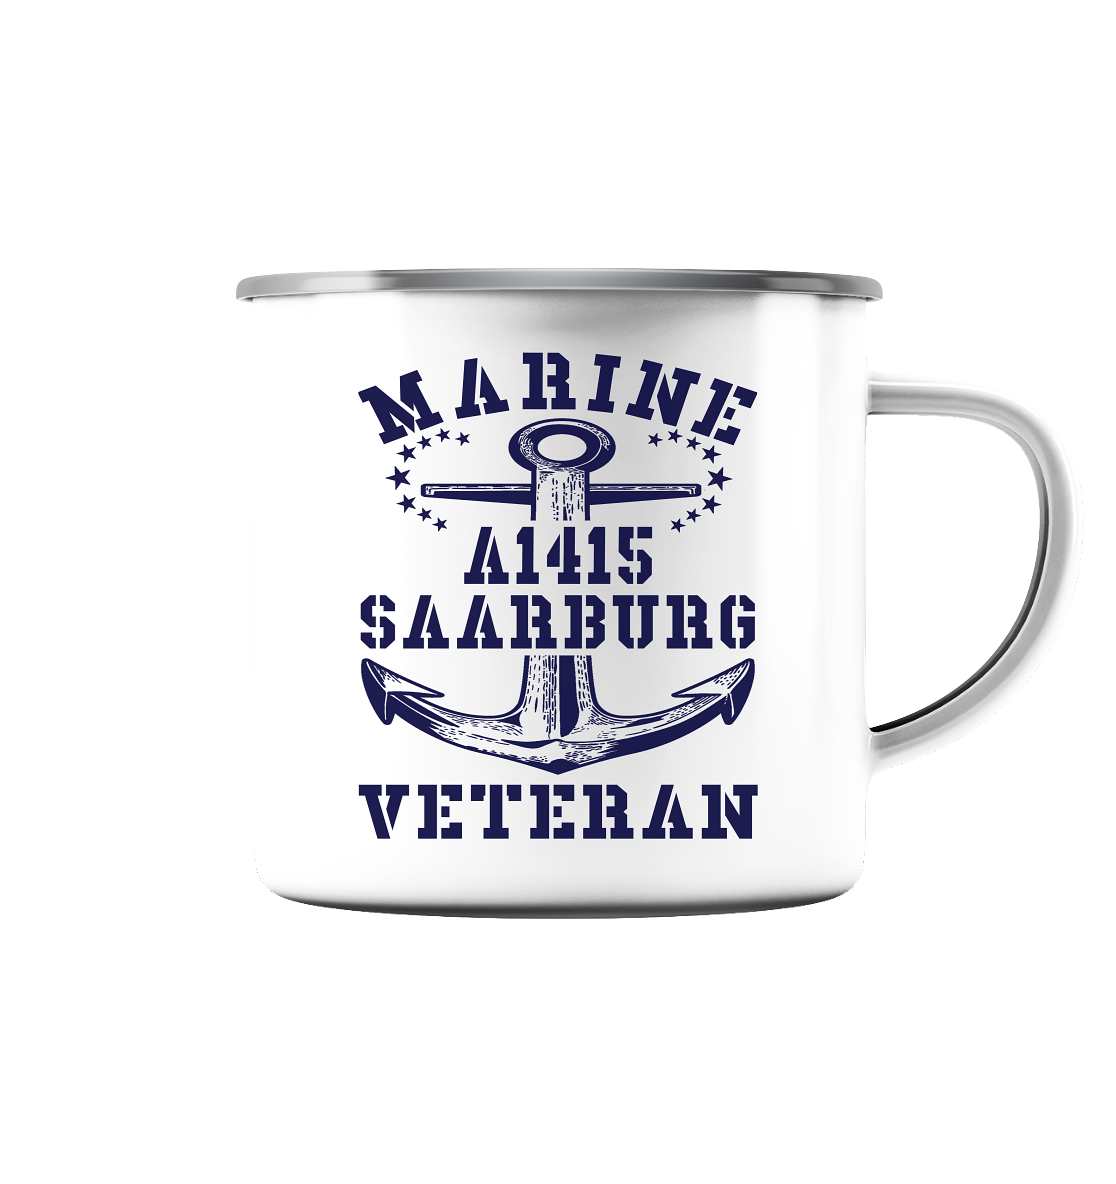 Troßschiff A1415 SAARBURG Marine Veteran - Emaille Tasse (Silber)